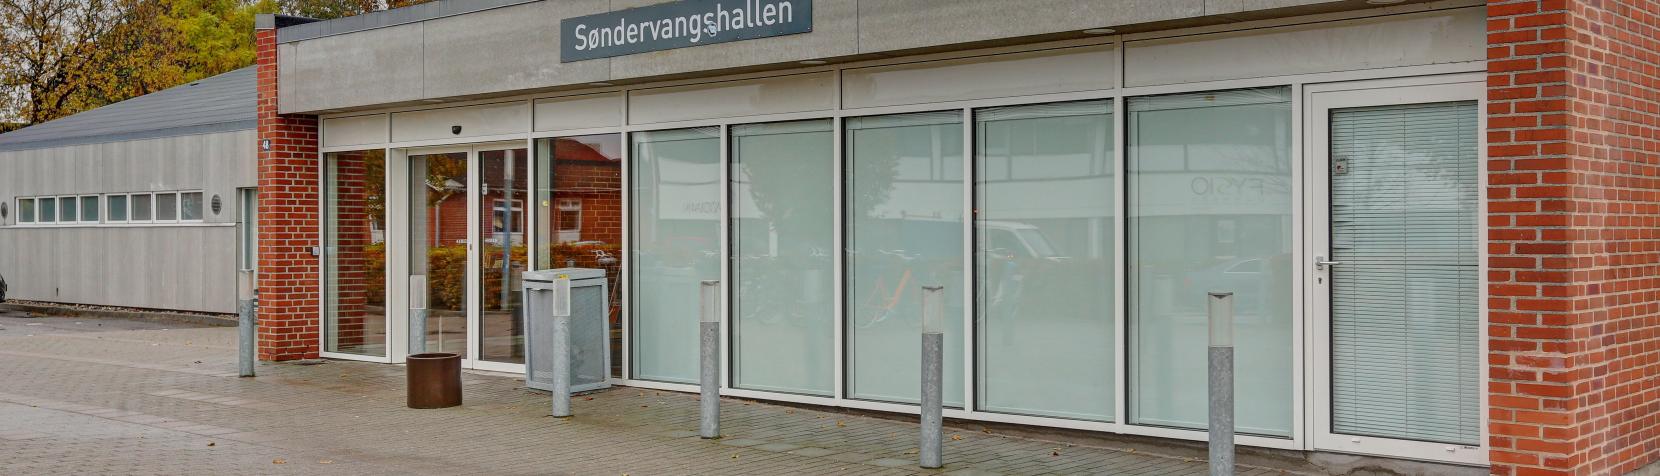 Foto: Søndervangshallen